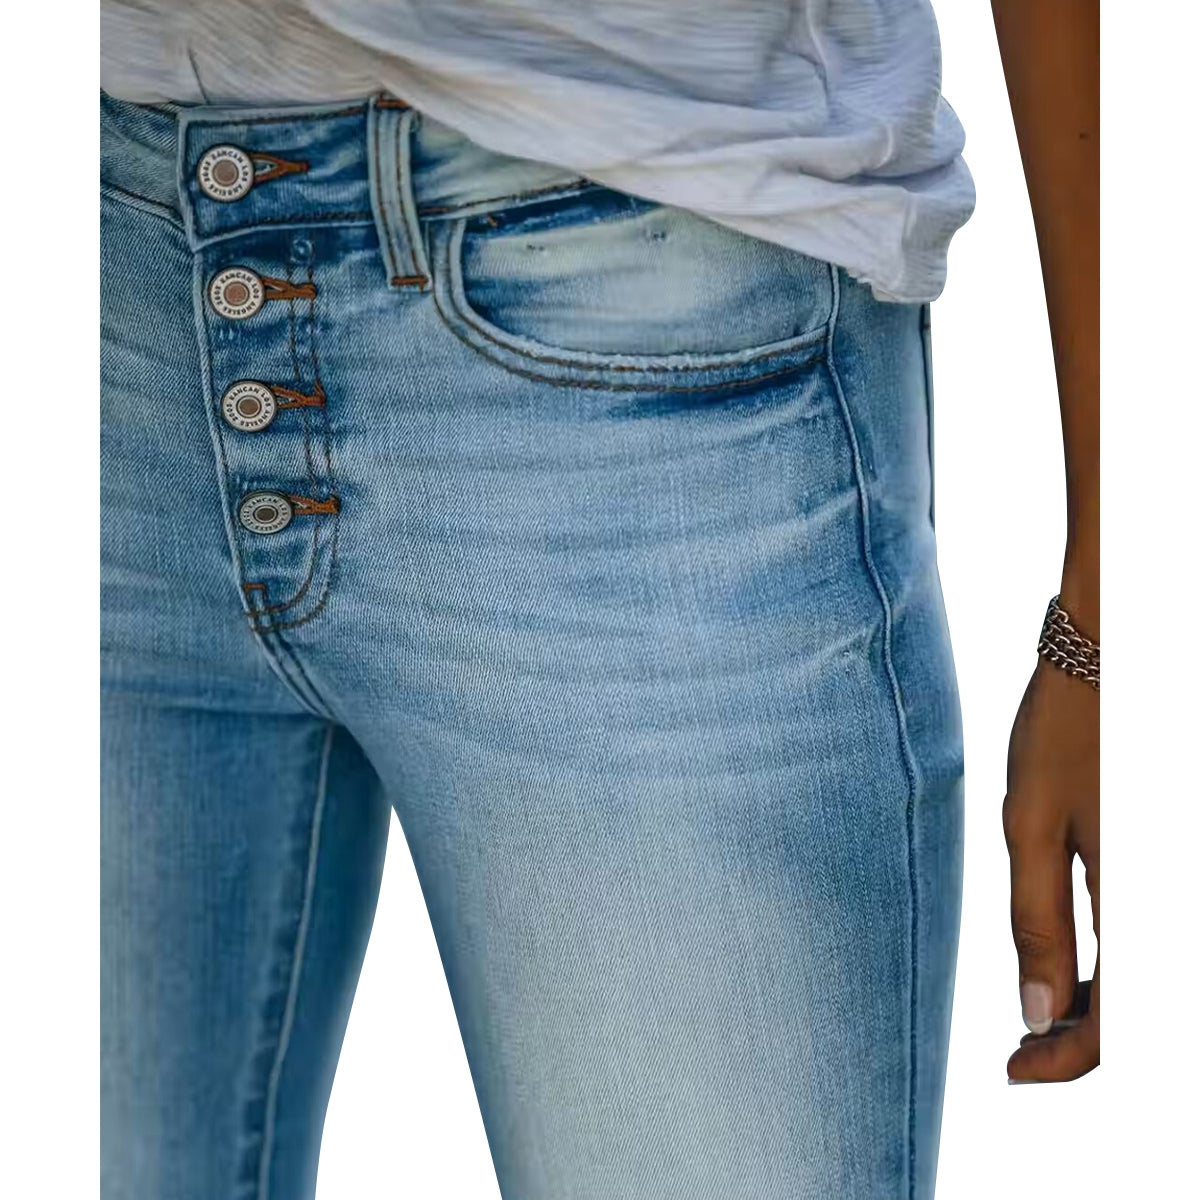 ZERMOM Women's Ripped Skinny Jeans Stretch Mid Rise Denim Pants